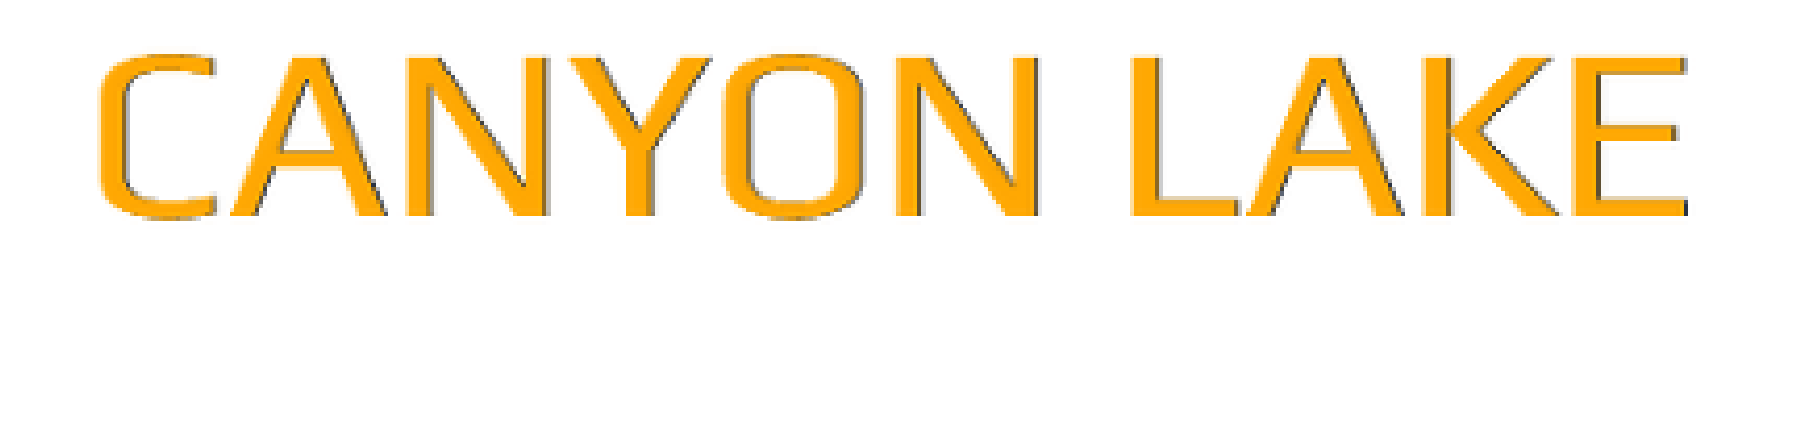 Canyon Lake Logo